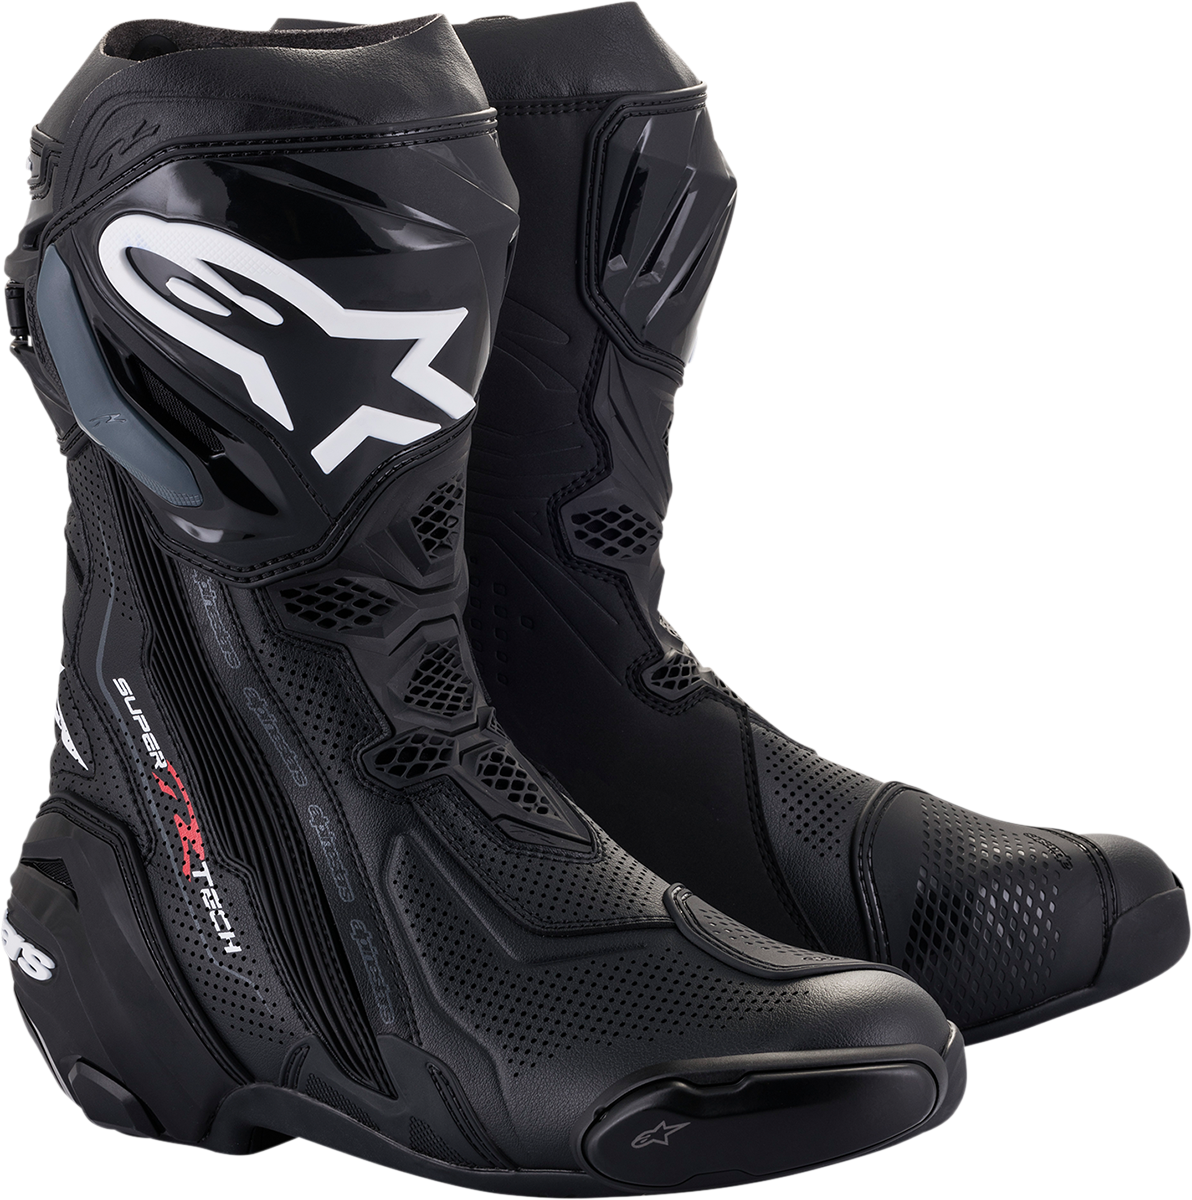 ALPINESTARS Supertech V Boots - Black - US 6 / EU 39 2220121-10-39